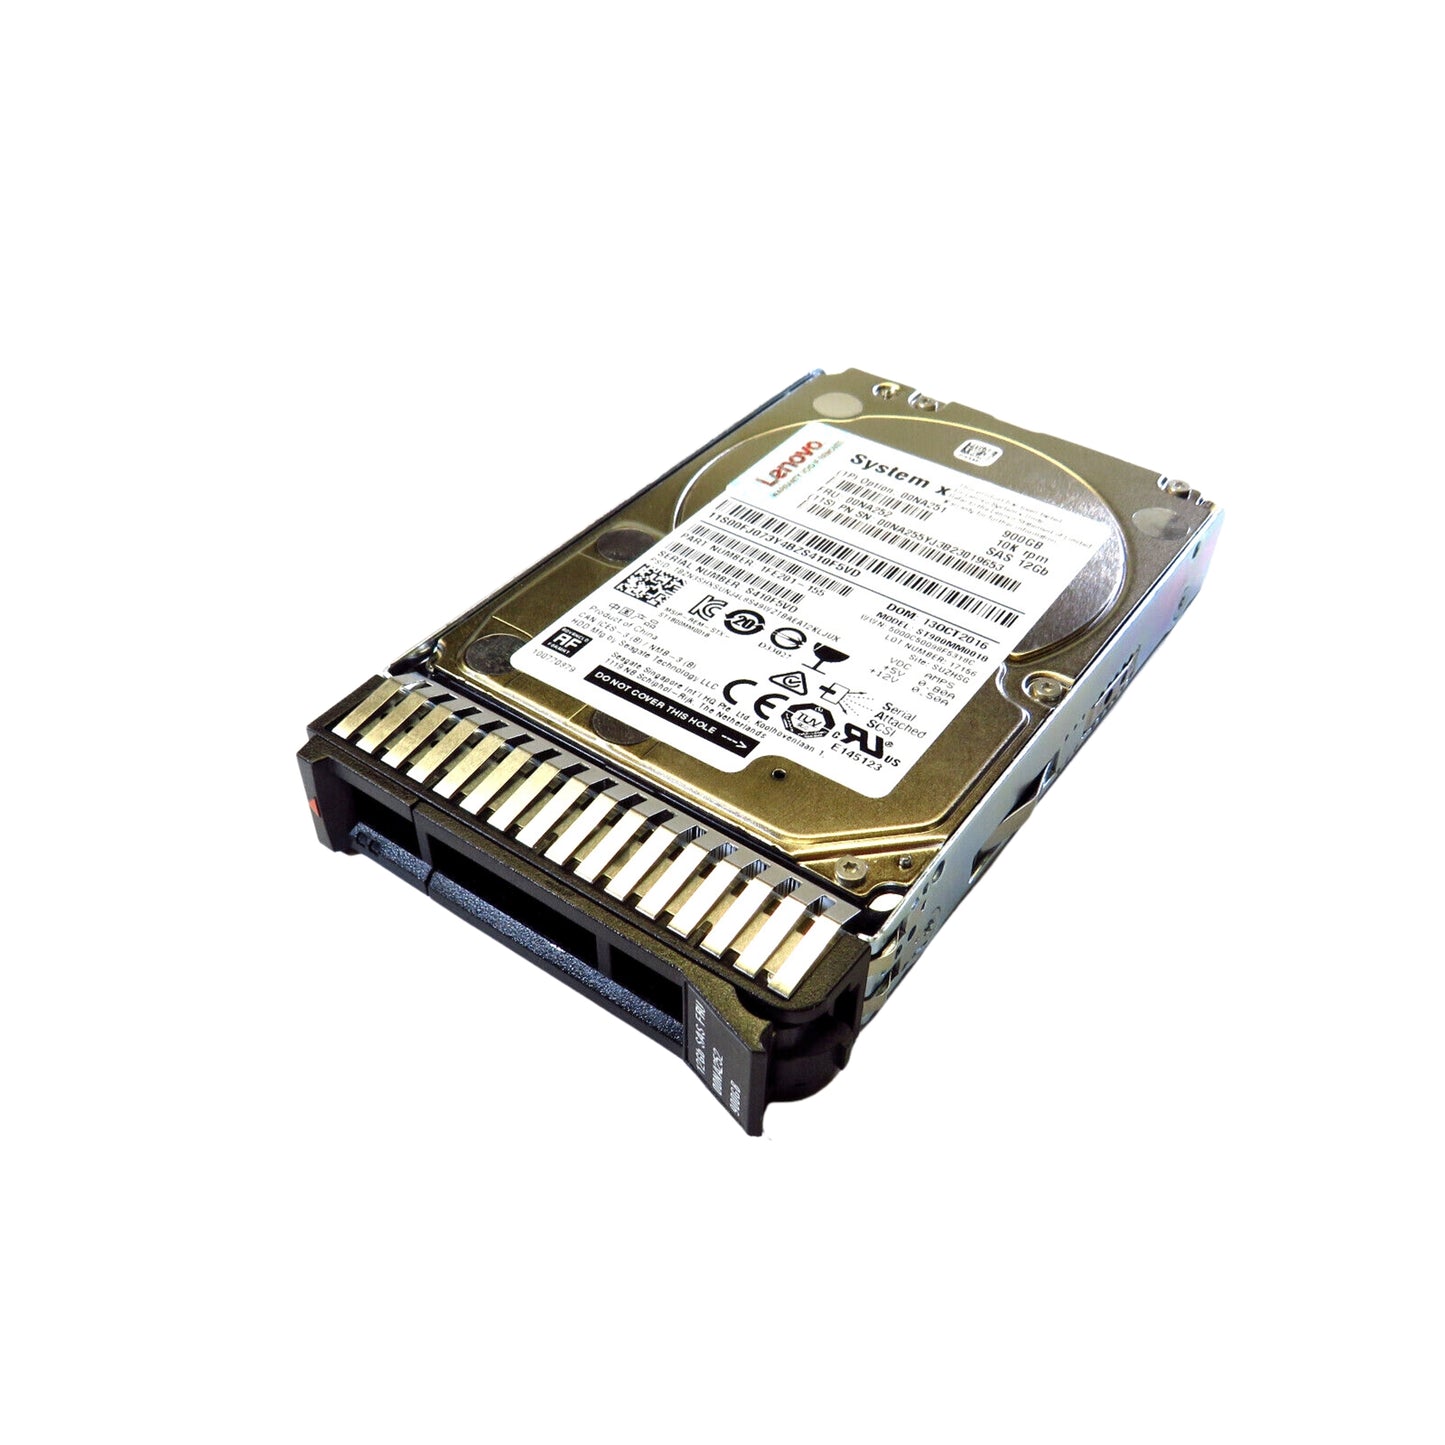 Lenovo 00NA251 2.5" 900GB 10000RPM SAS 12Gb/s Hard Disk Drive (HDD), Silver (Refurbished)